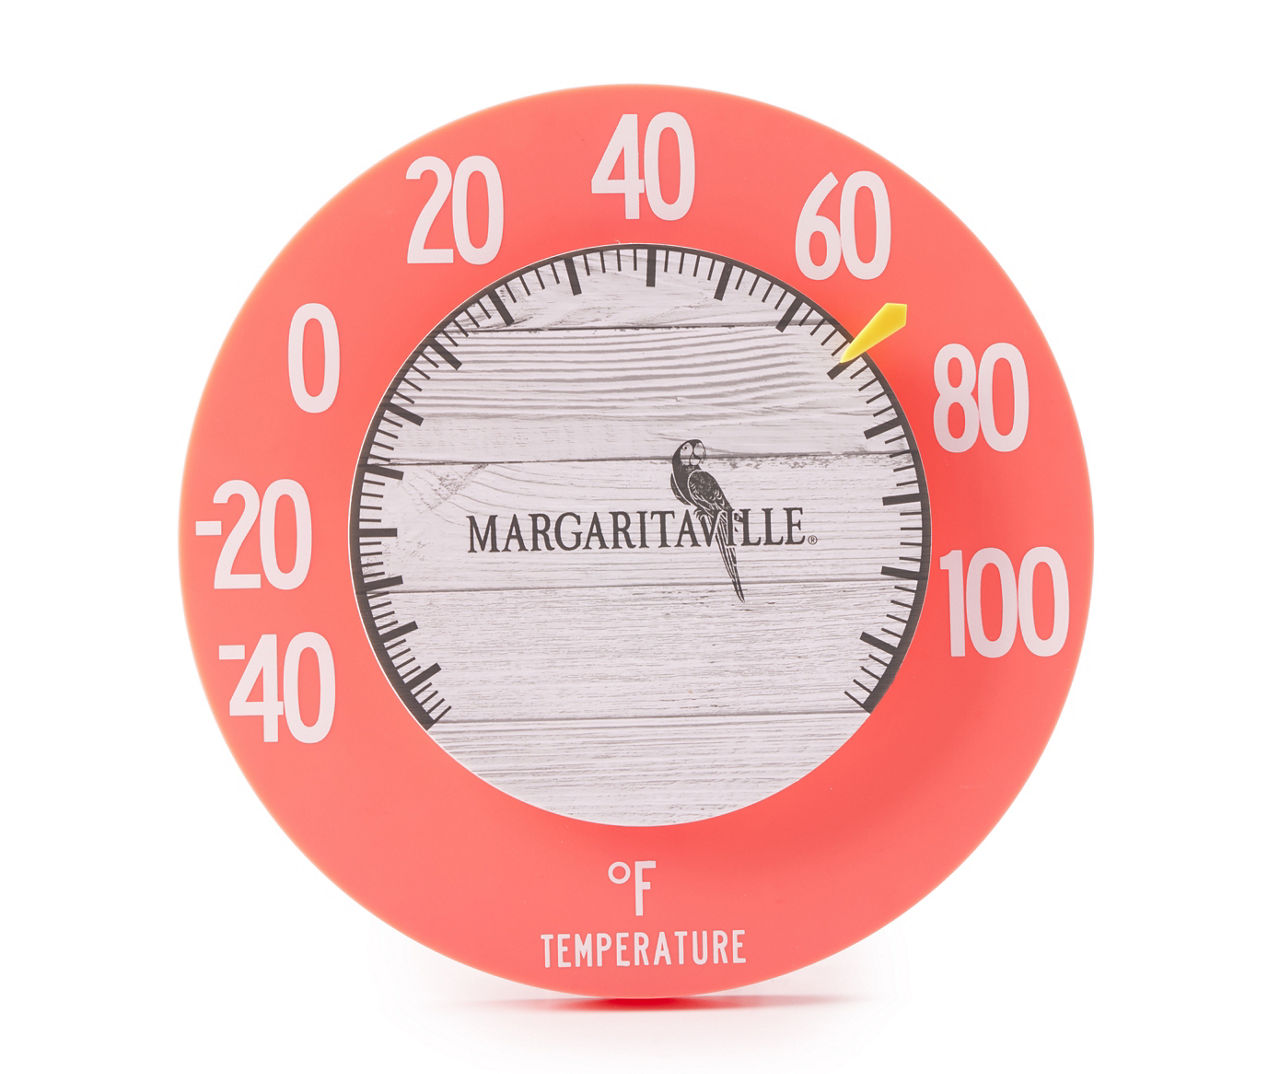 Margaritaville Pink Beach Scene Wall Indoor/Outdoor Analog Thermometer